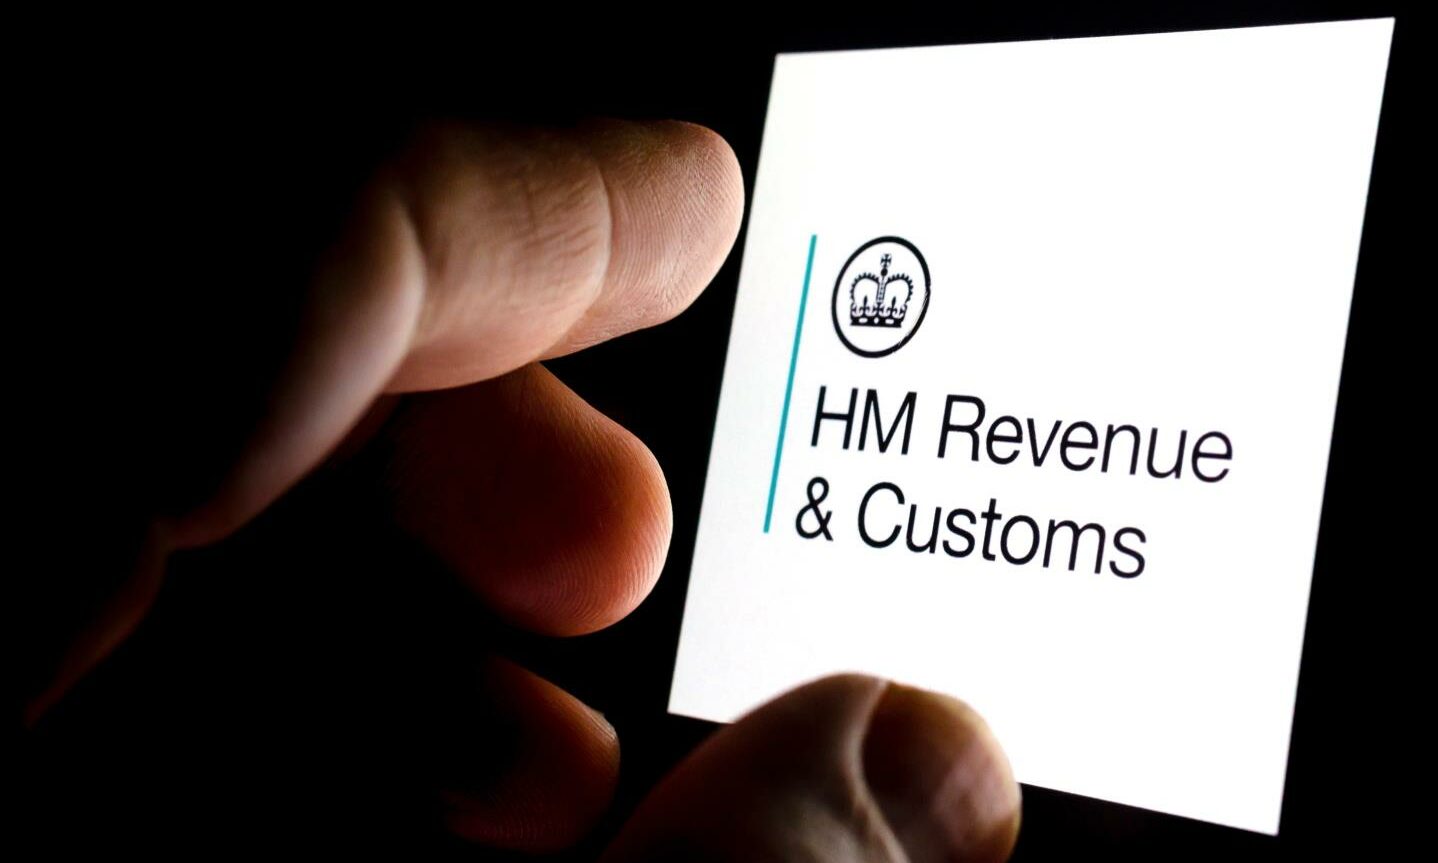 HMRC logo on phone screen. 